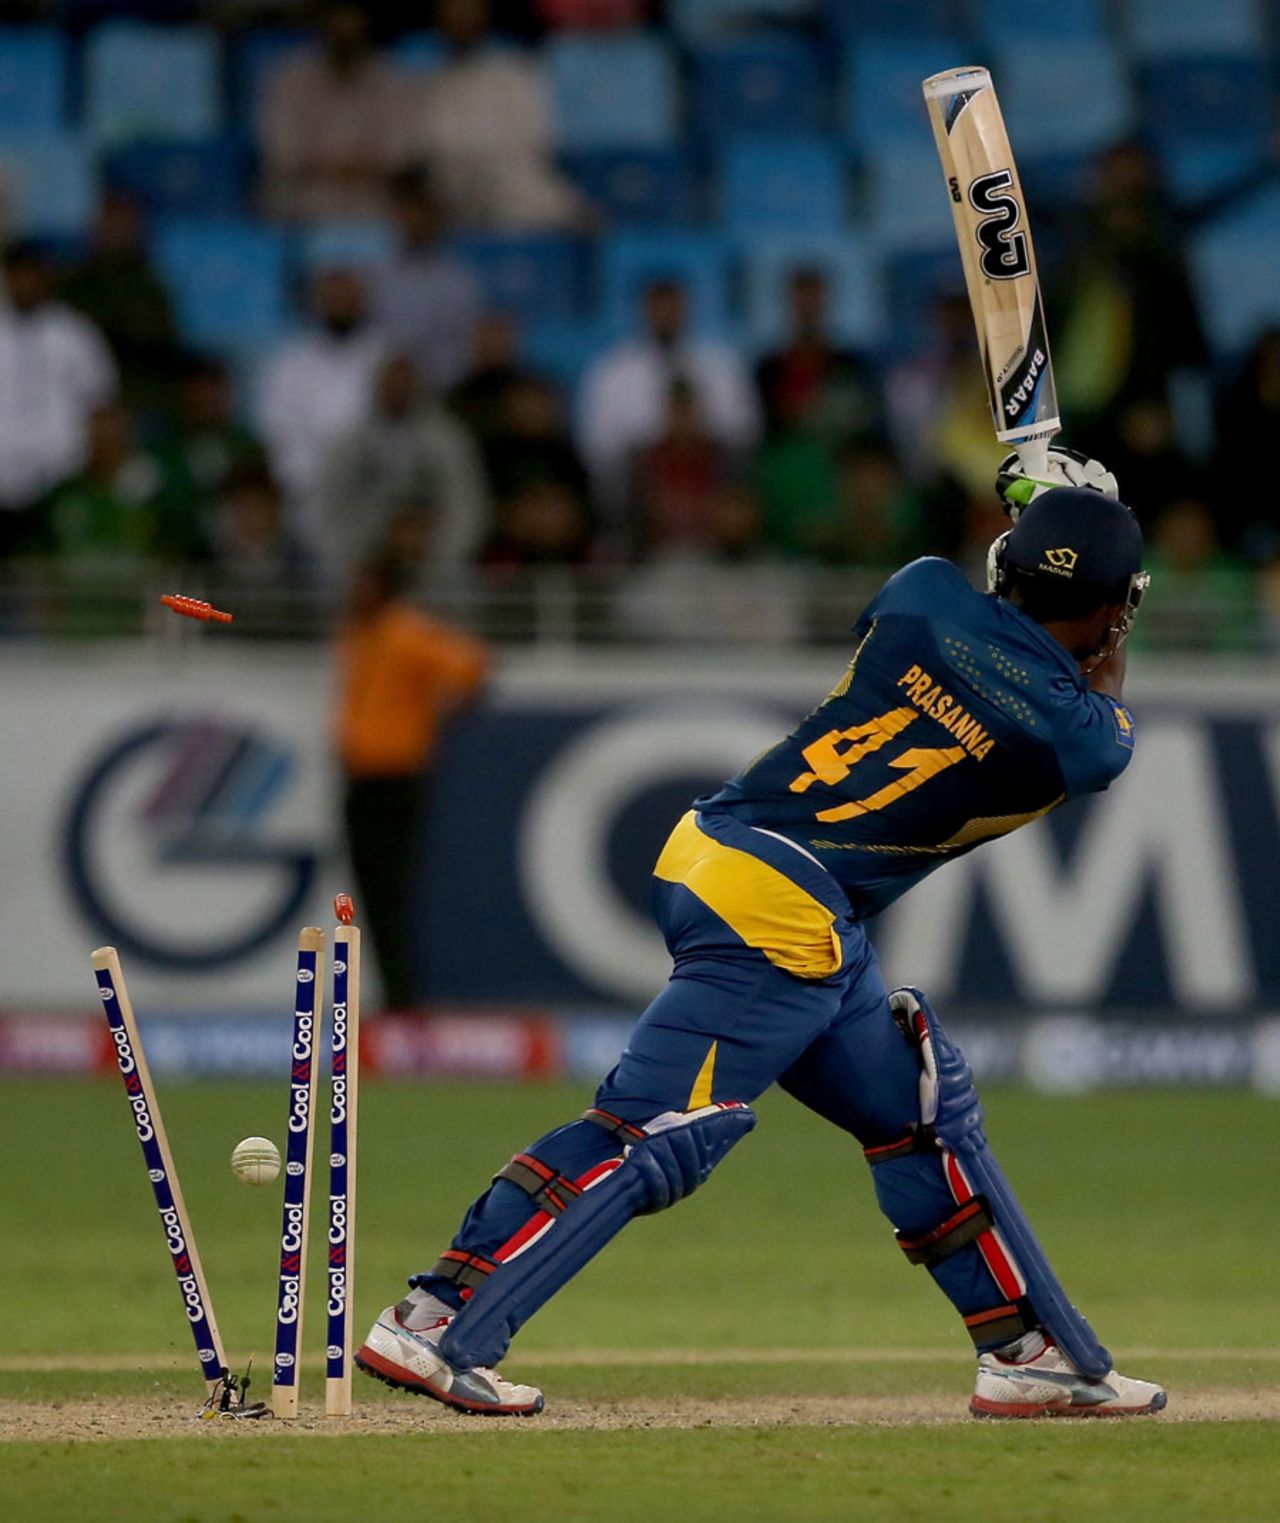 Seekluge Prasanna was bowled for 6, Pakistan v Sri Lanka, 2nd ODI, Dubai, December 20, 2013